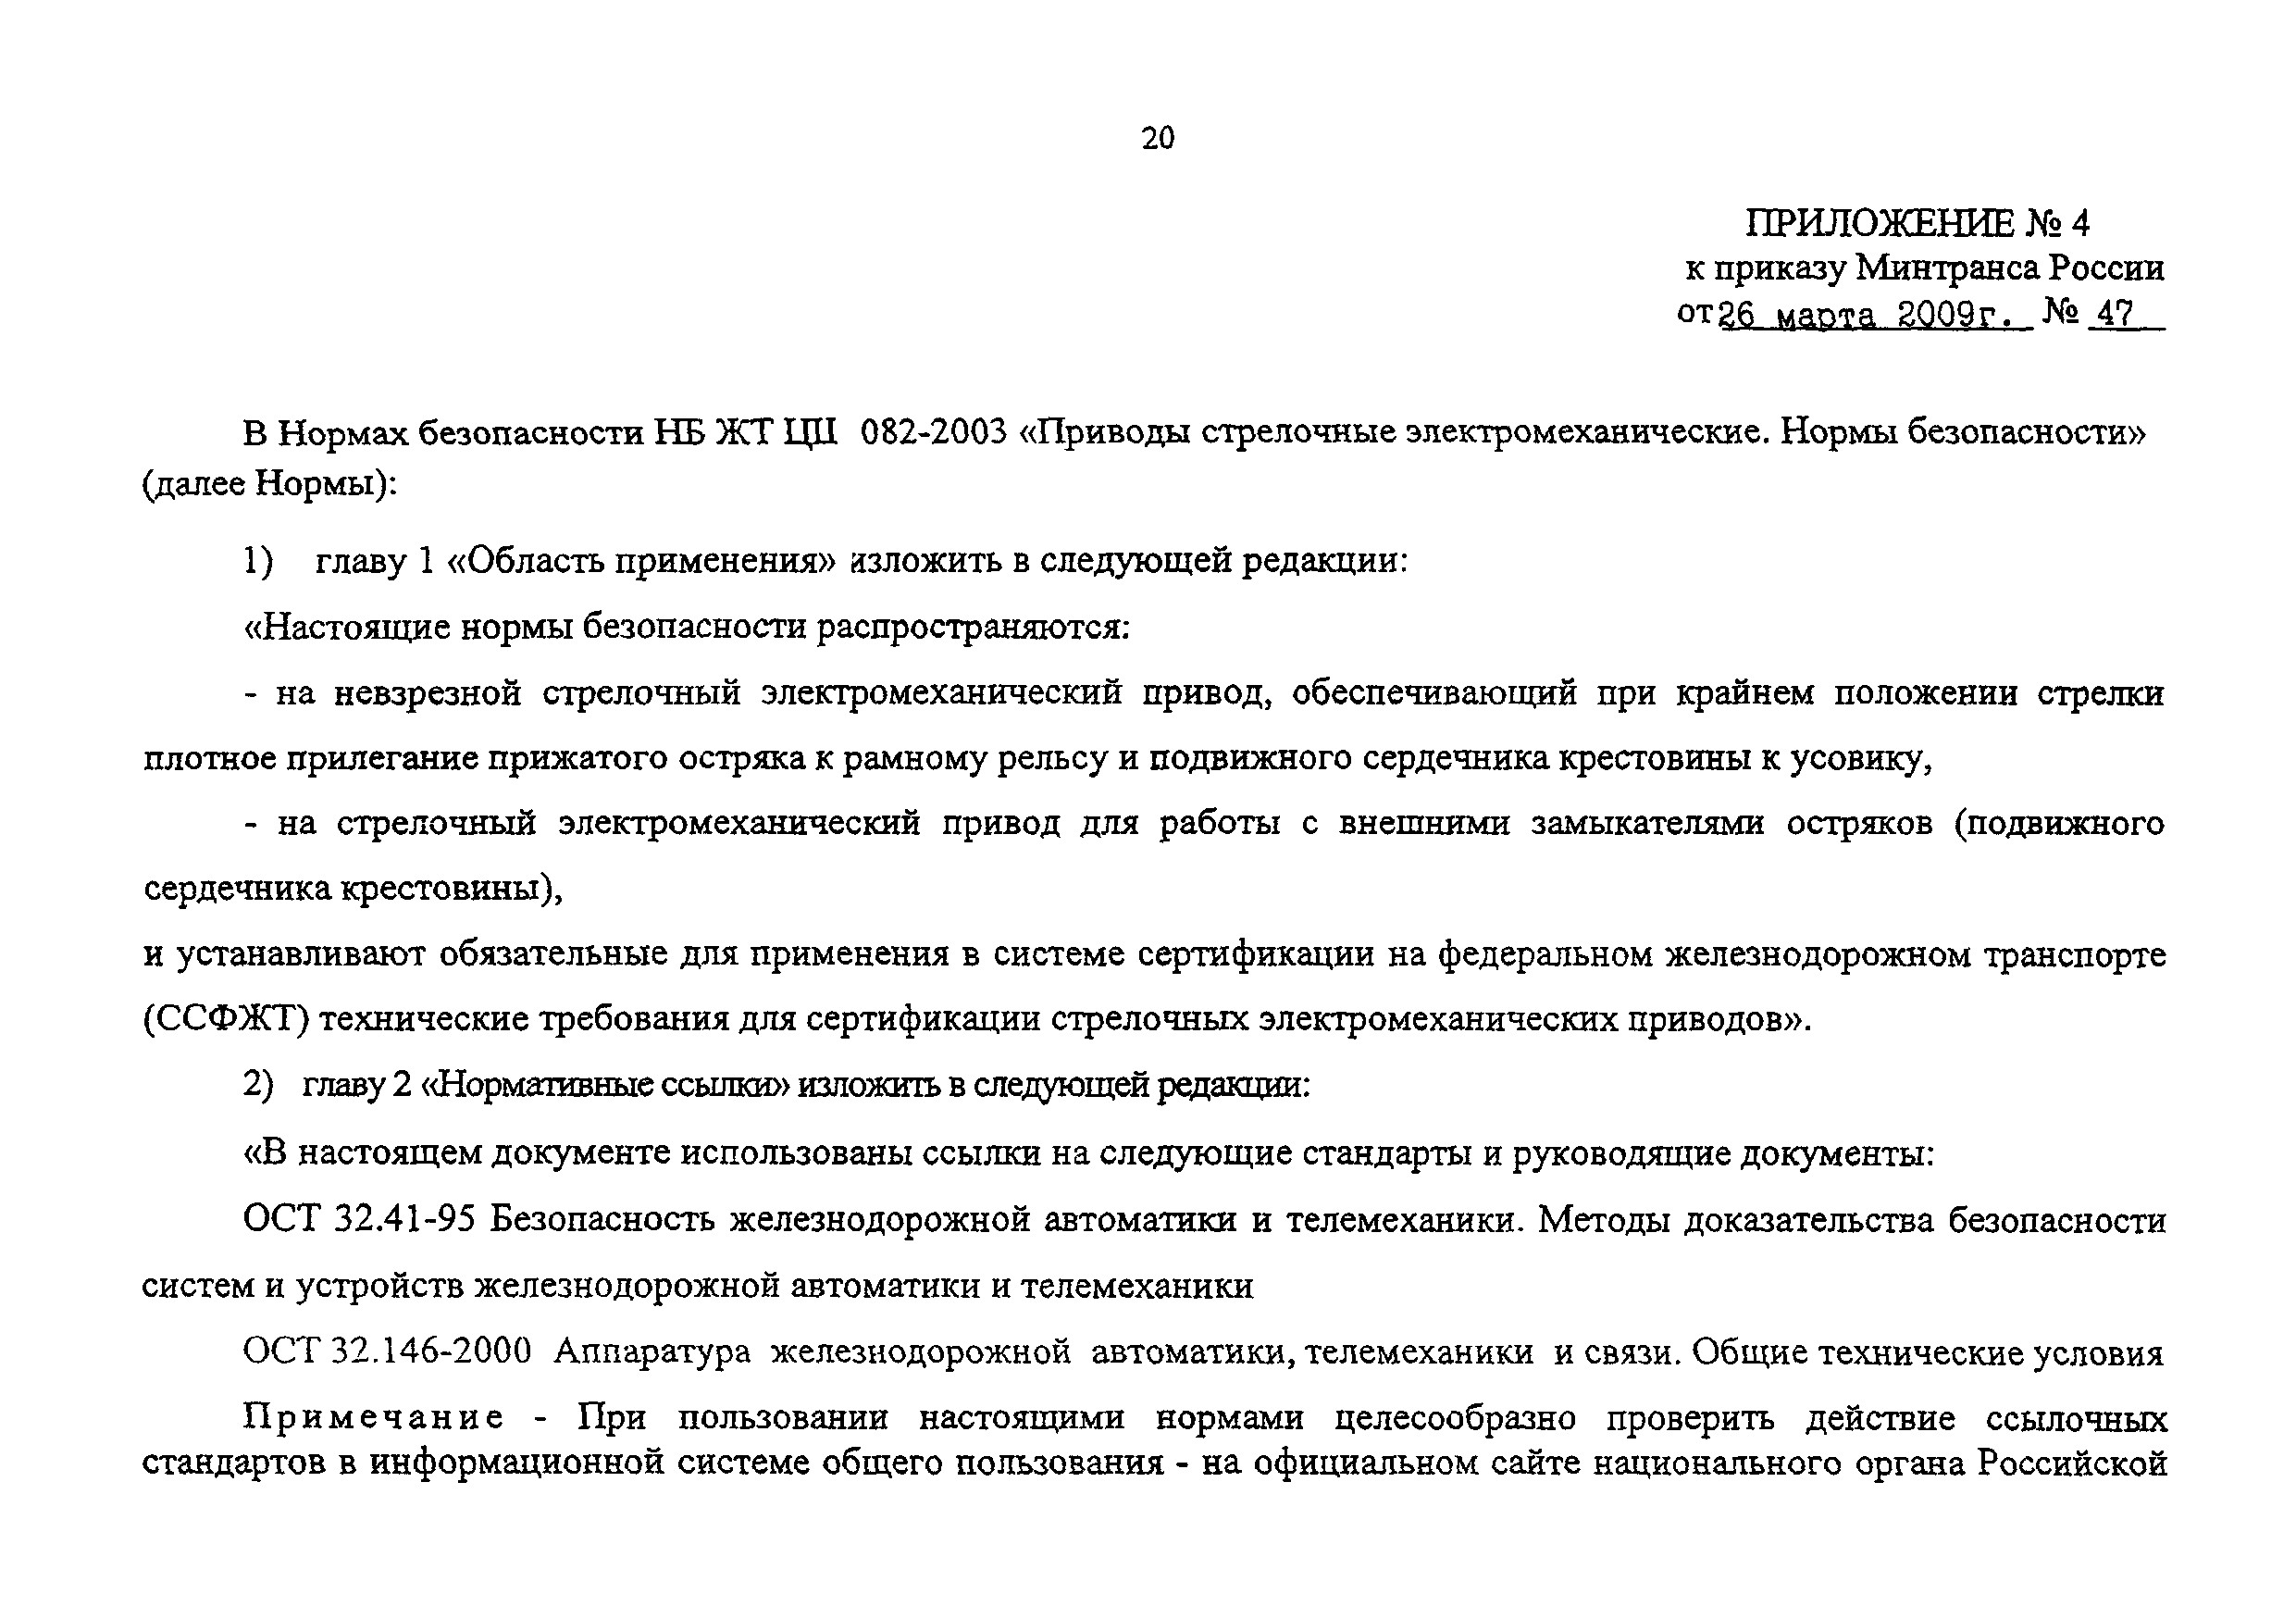 НБ ЖТ ЦШ 082-2003